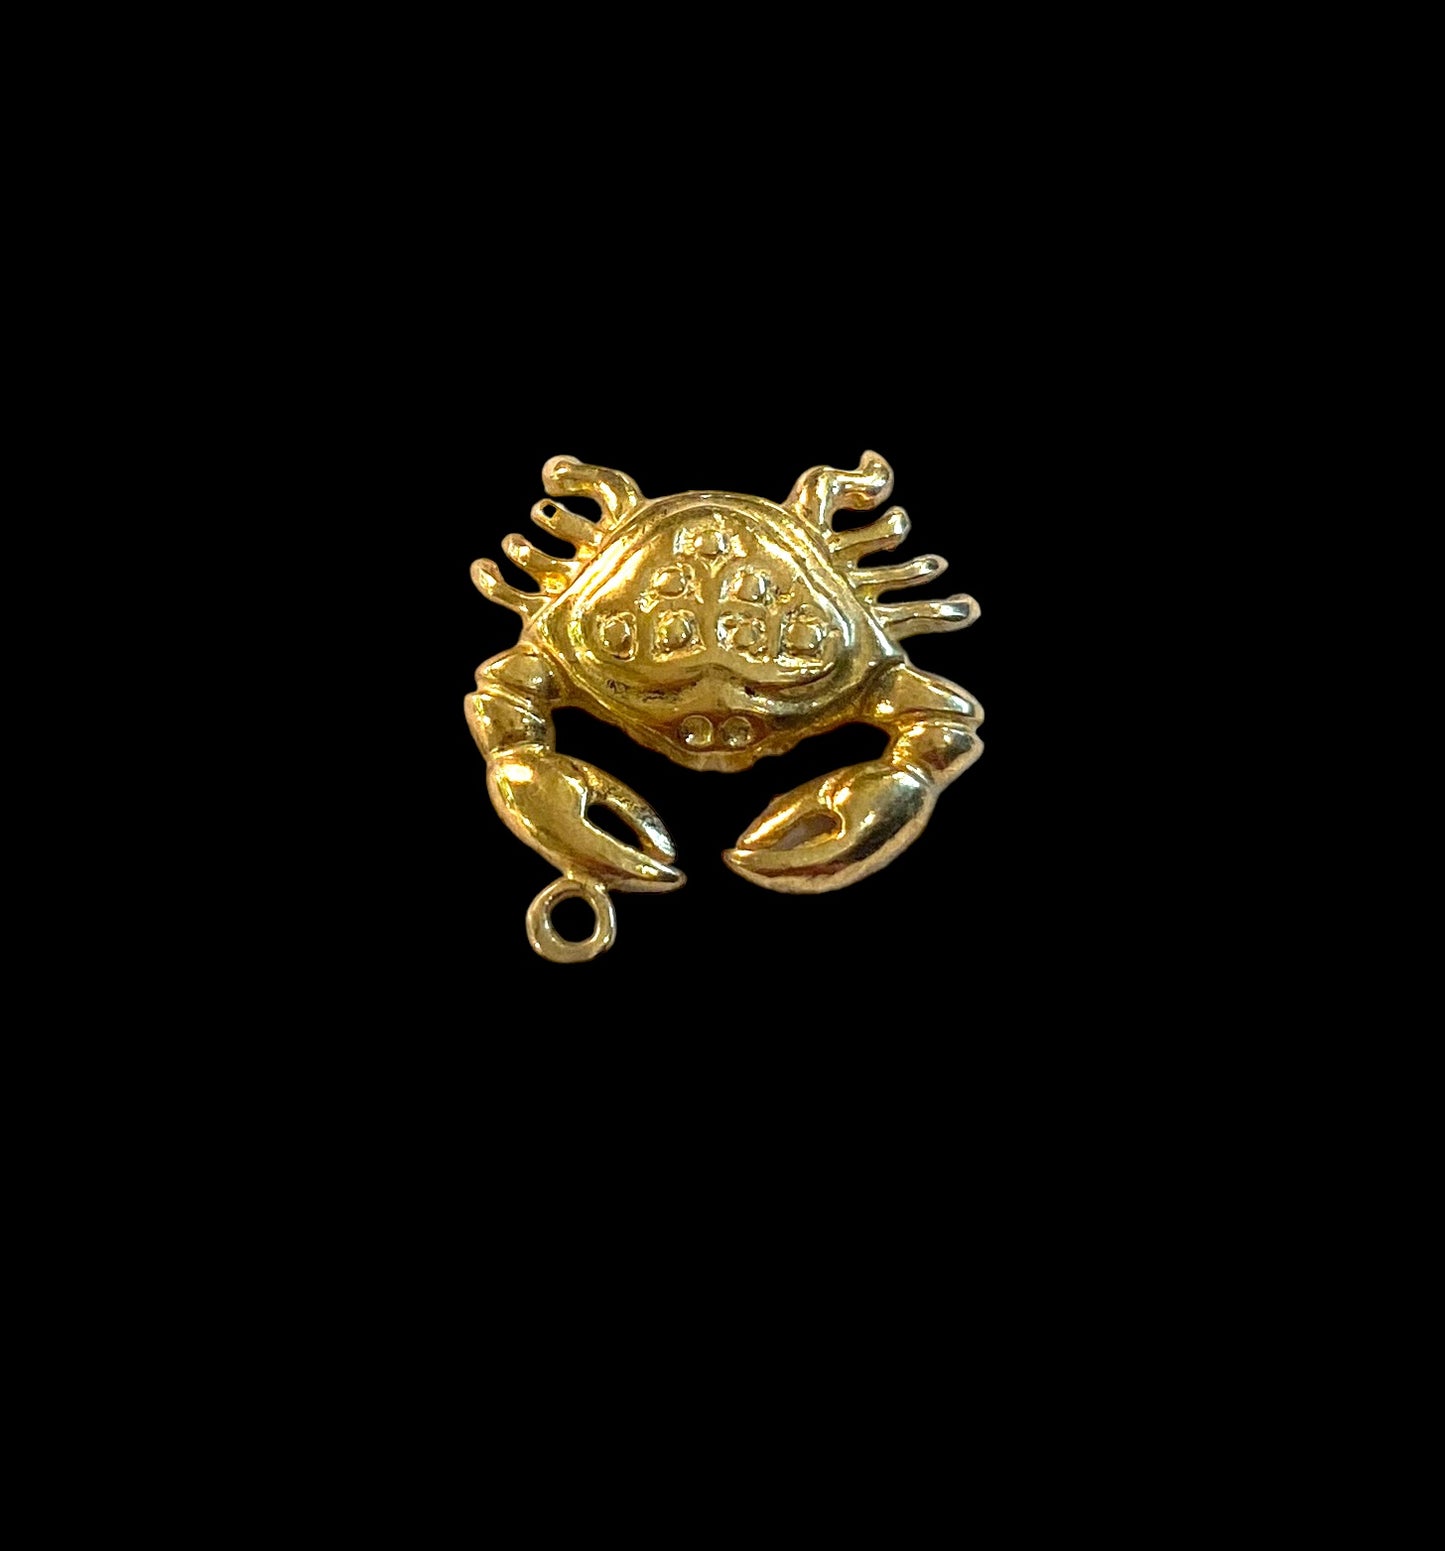 9ct 375 vintage gold crab / cancer charm